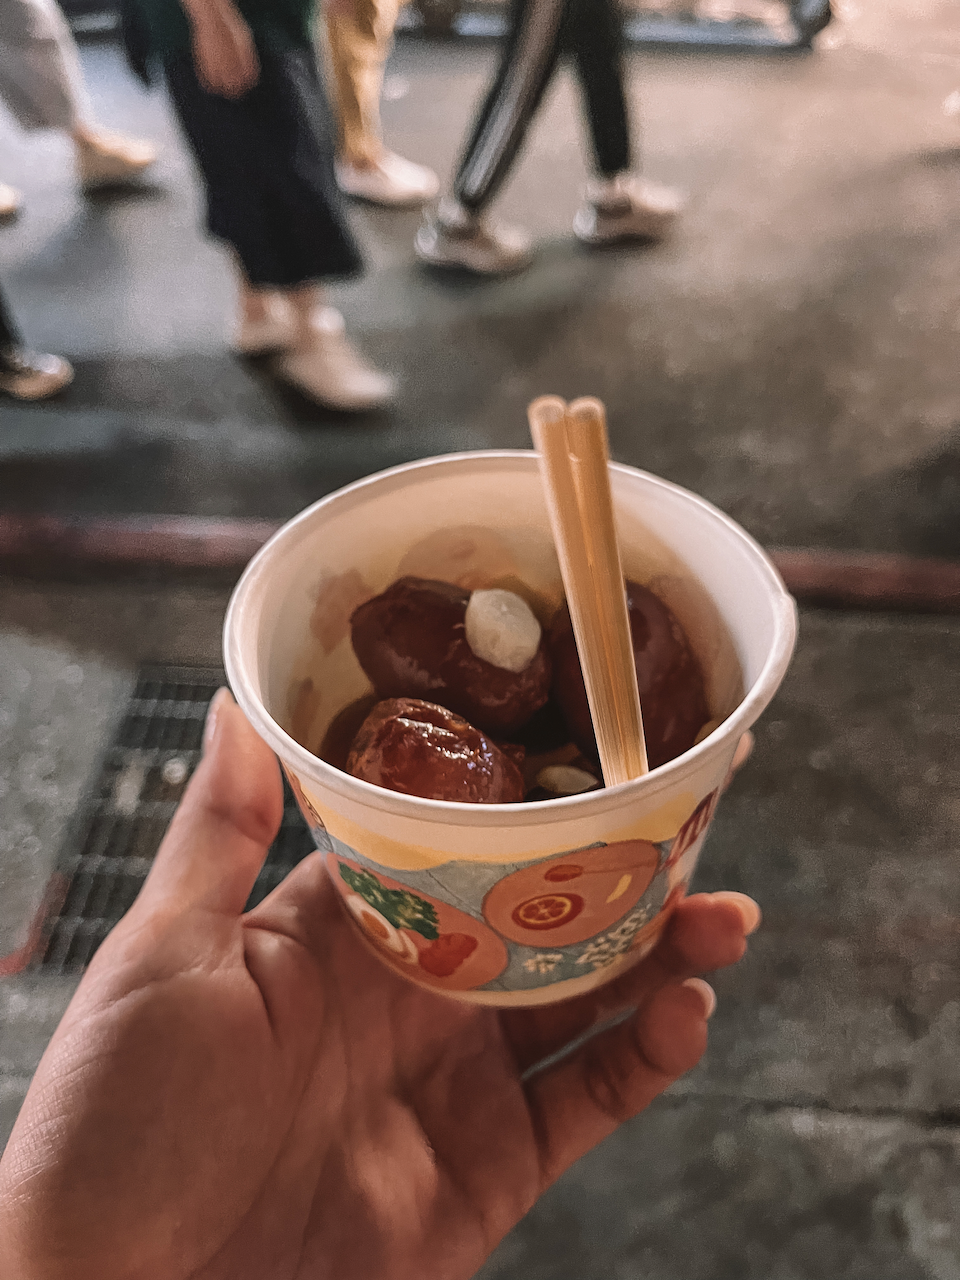 Mini Taiwan sausages in a cup at Raohe St Night Market - Taipei - Taiwan